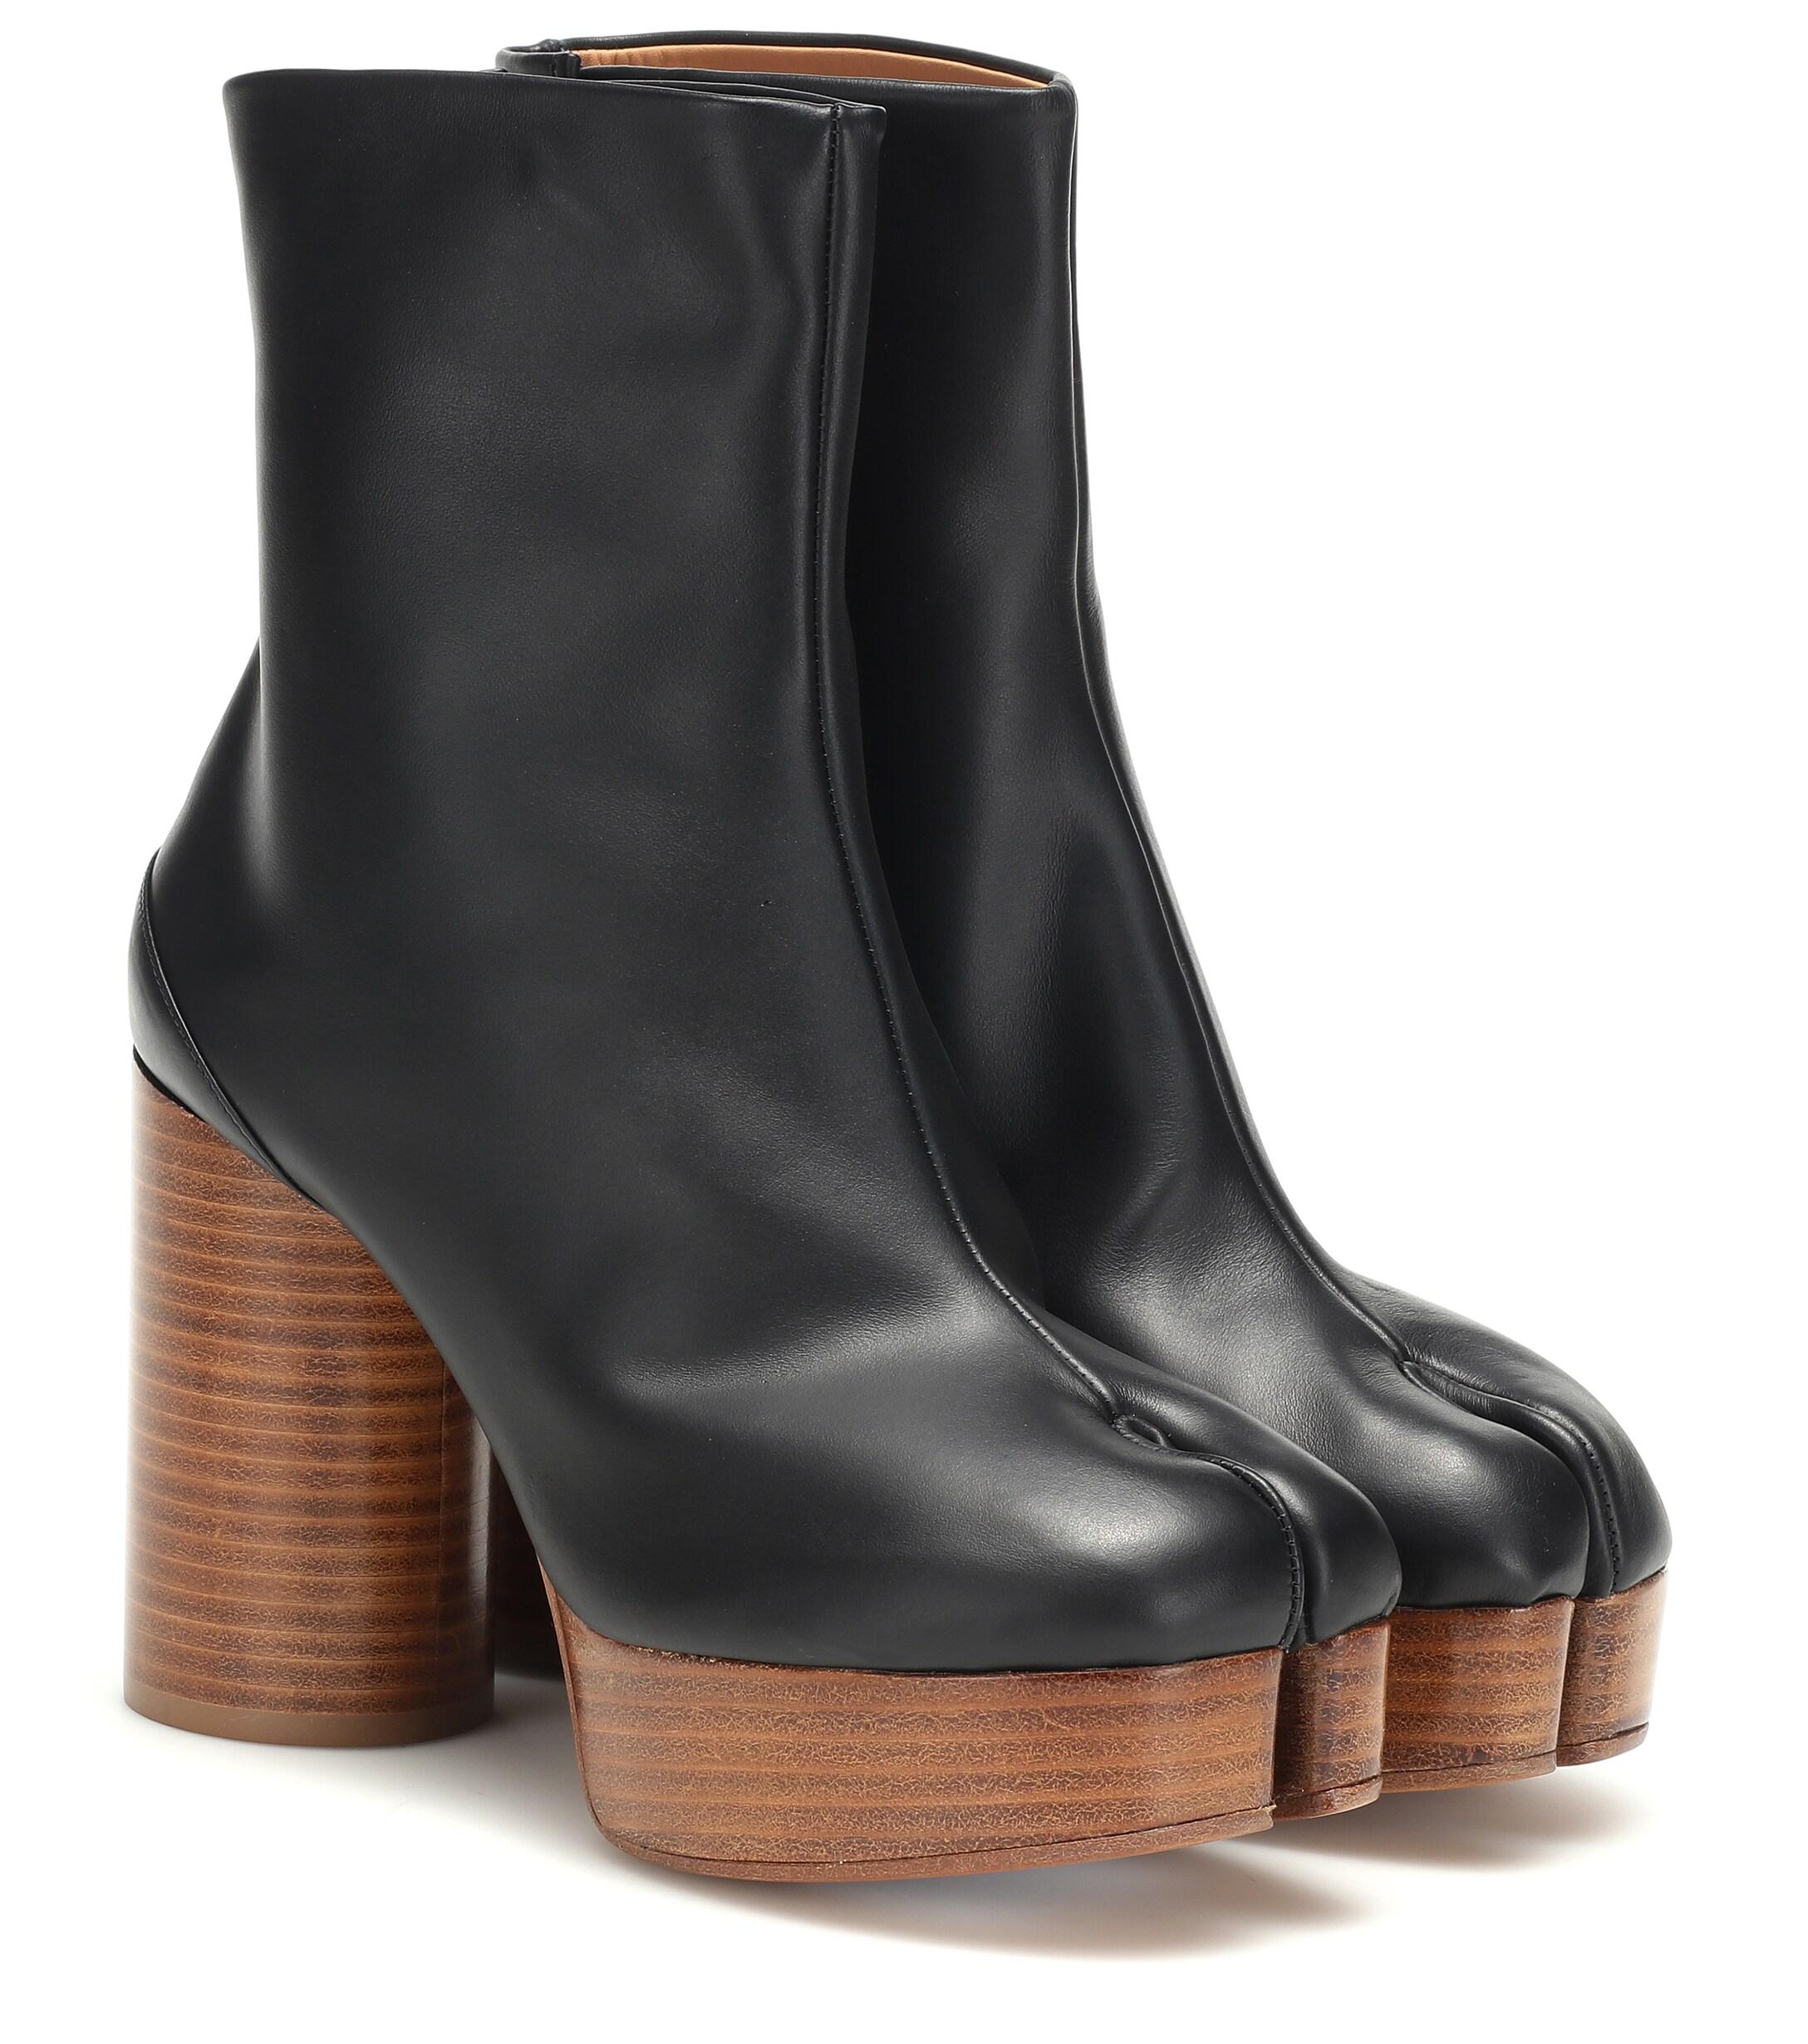 Maison Margiela Tabi Platform Leather Boots in Black - Lyst